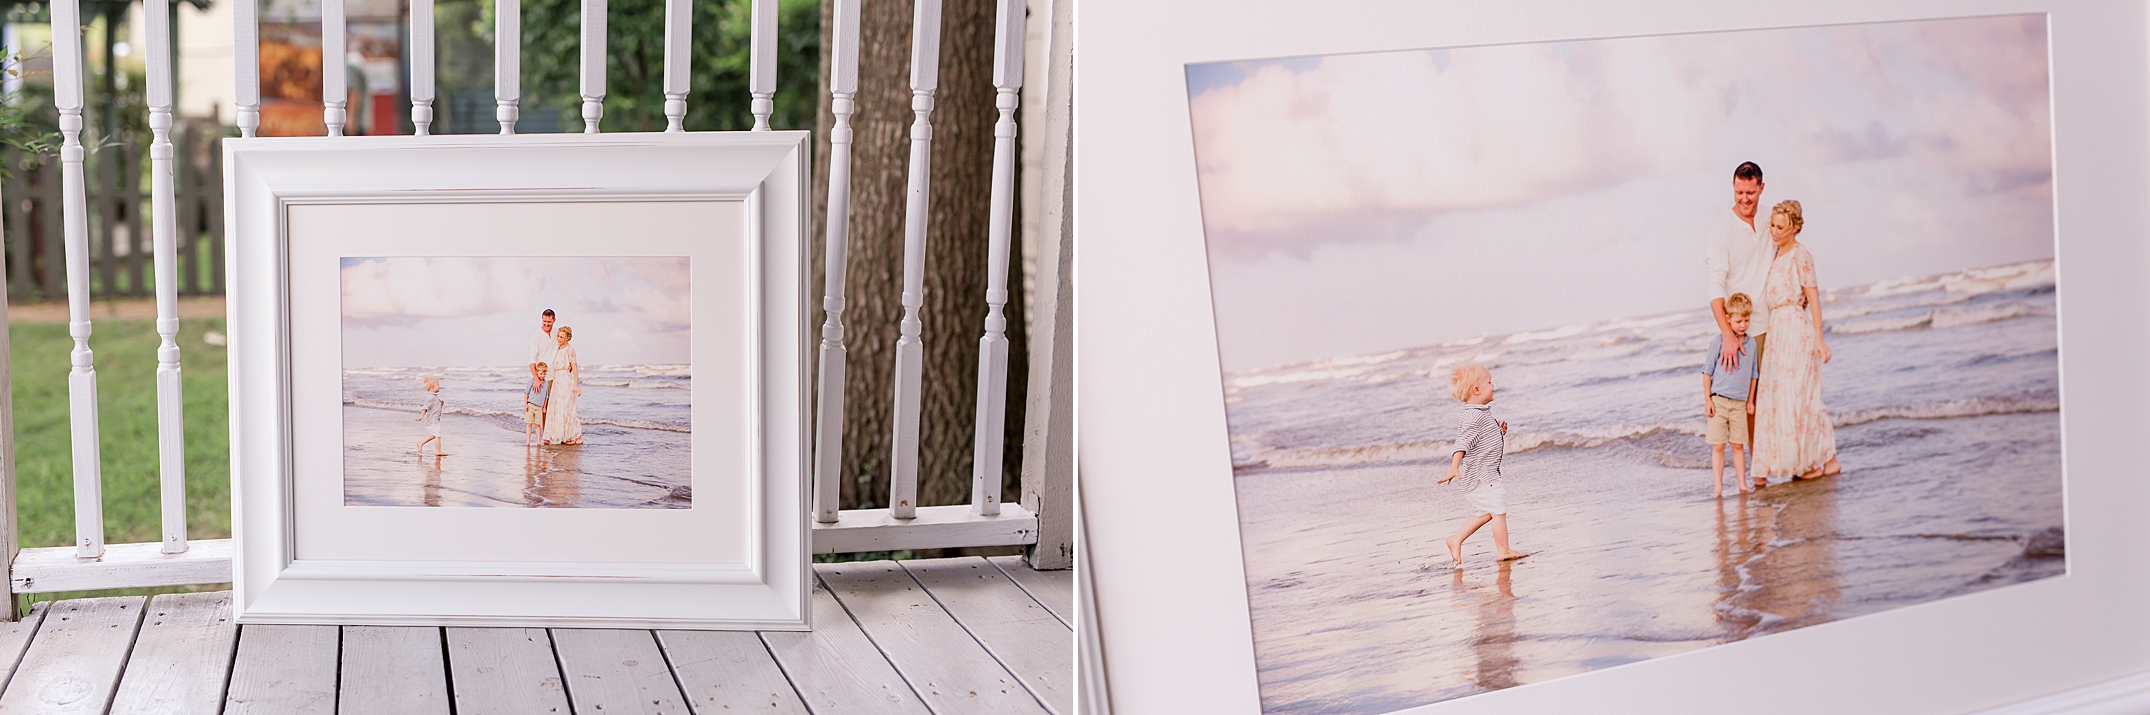 Framed Print from galveston beach session